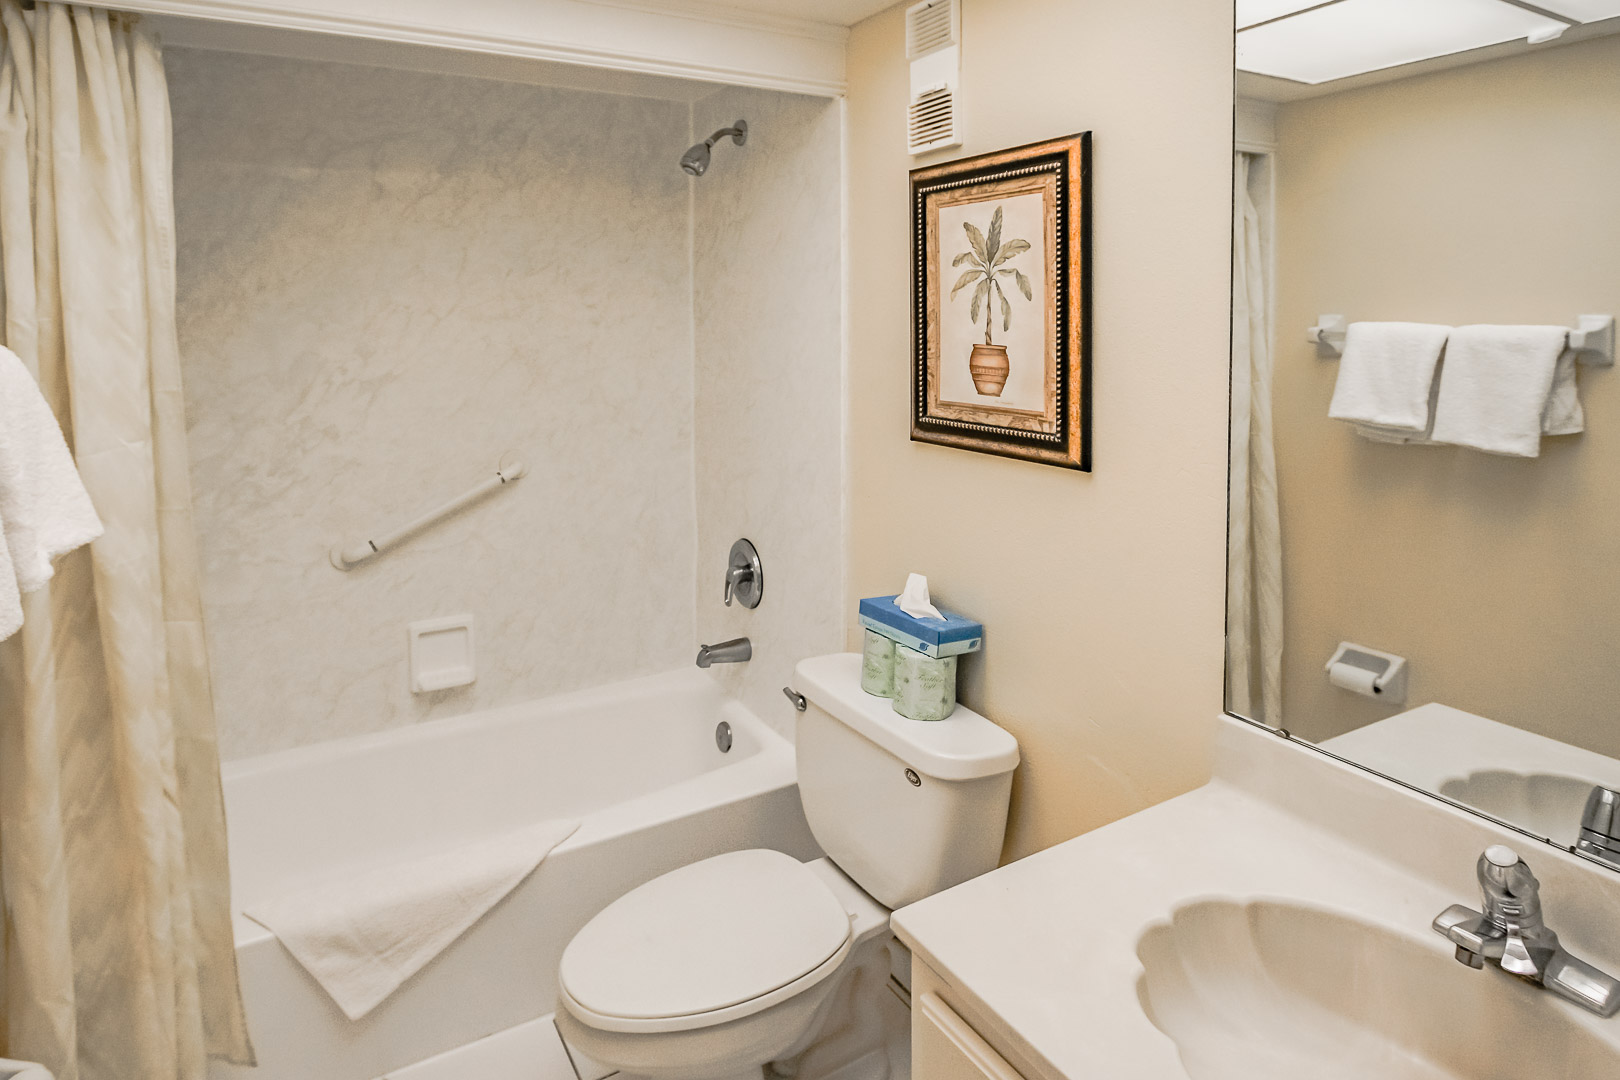 A clean bathroom at VRI's Sand Pebble Resort in Treasure Island, Florida.